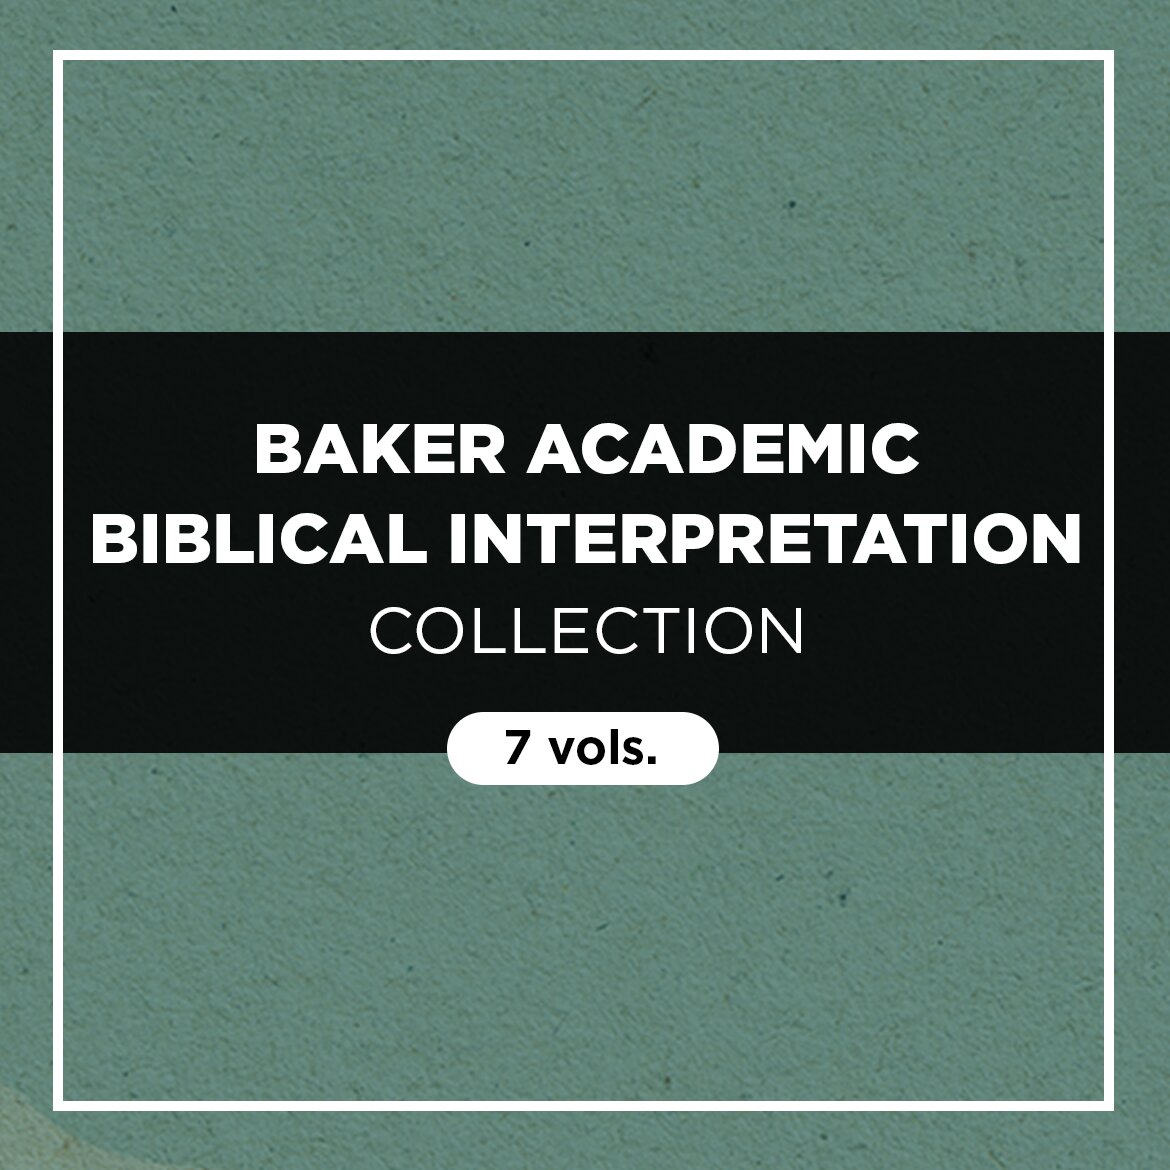 Baker Academic Biblical Interpretation Collection (7 vols.)